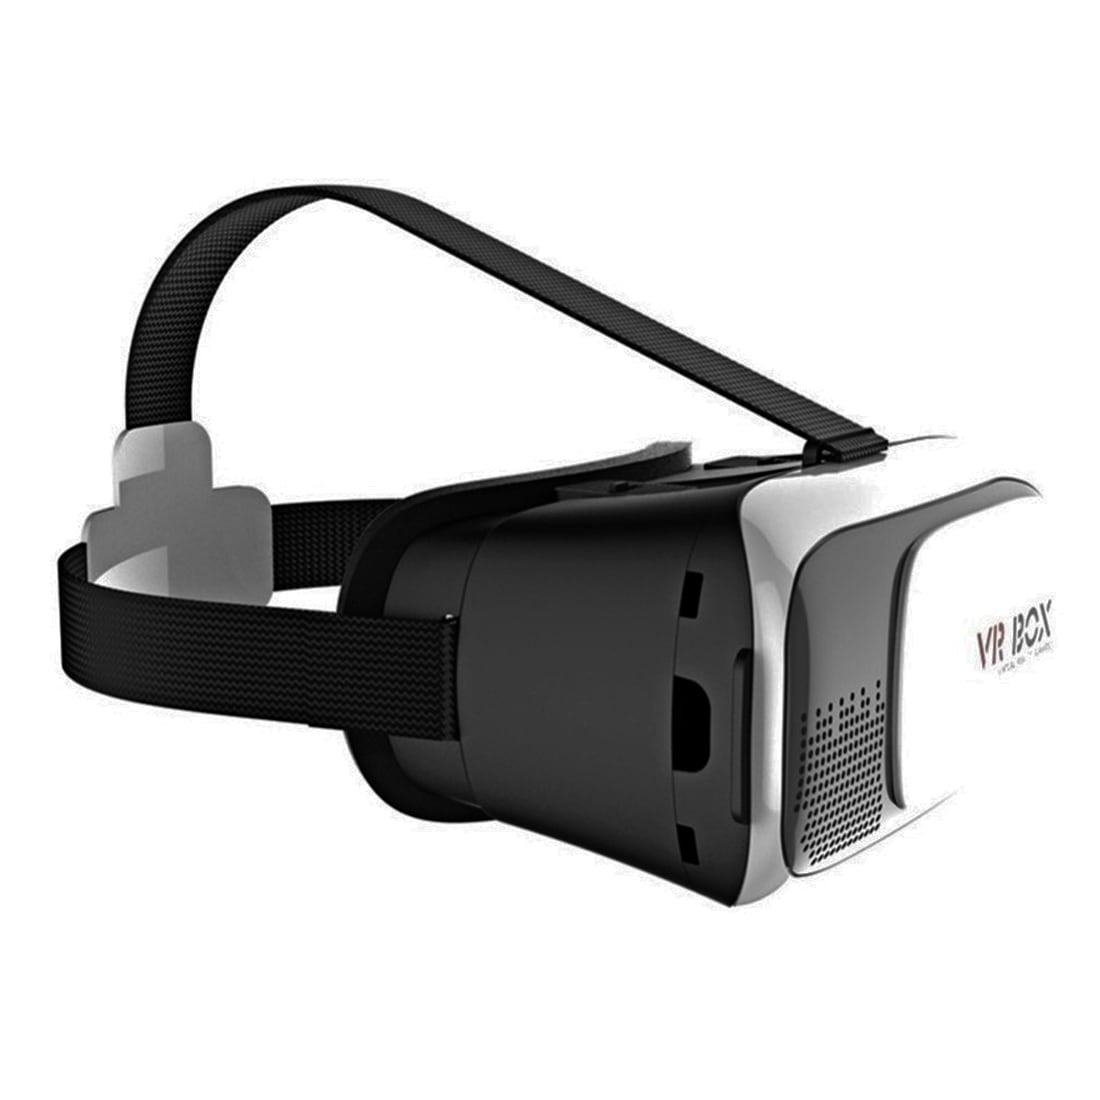 3D VR Bluetooth Glasögon + Gamepad 3,5-6" skärm